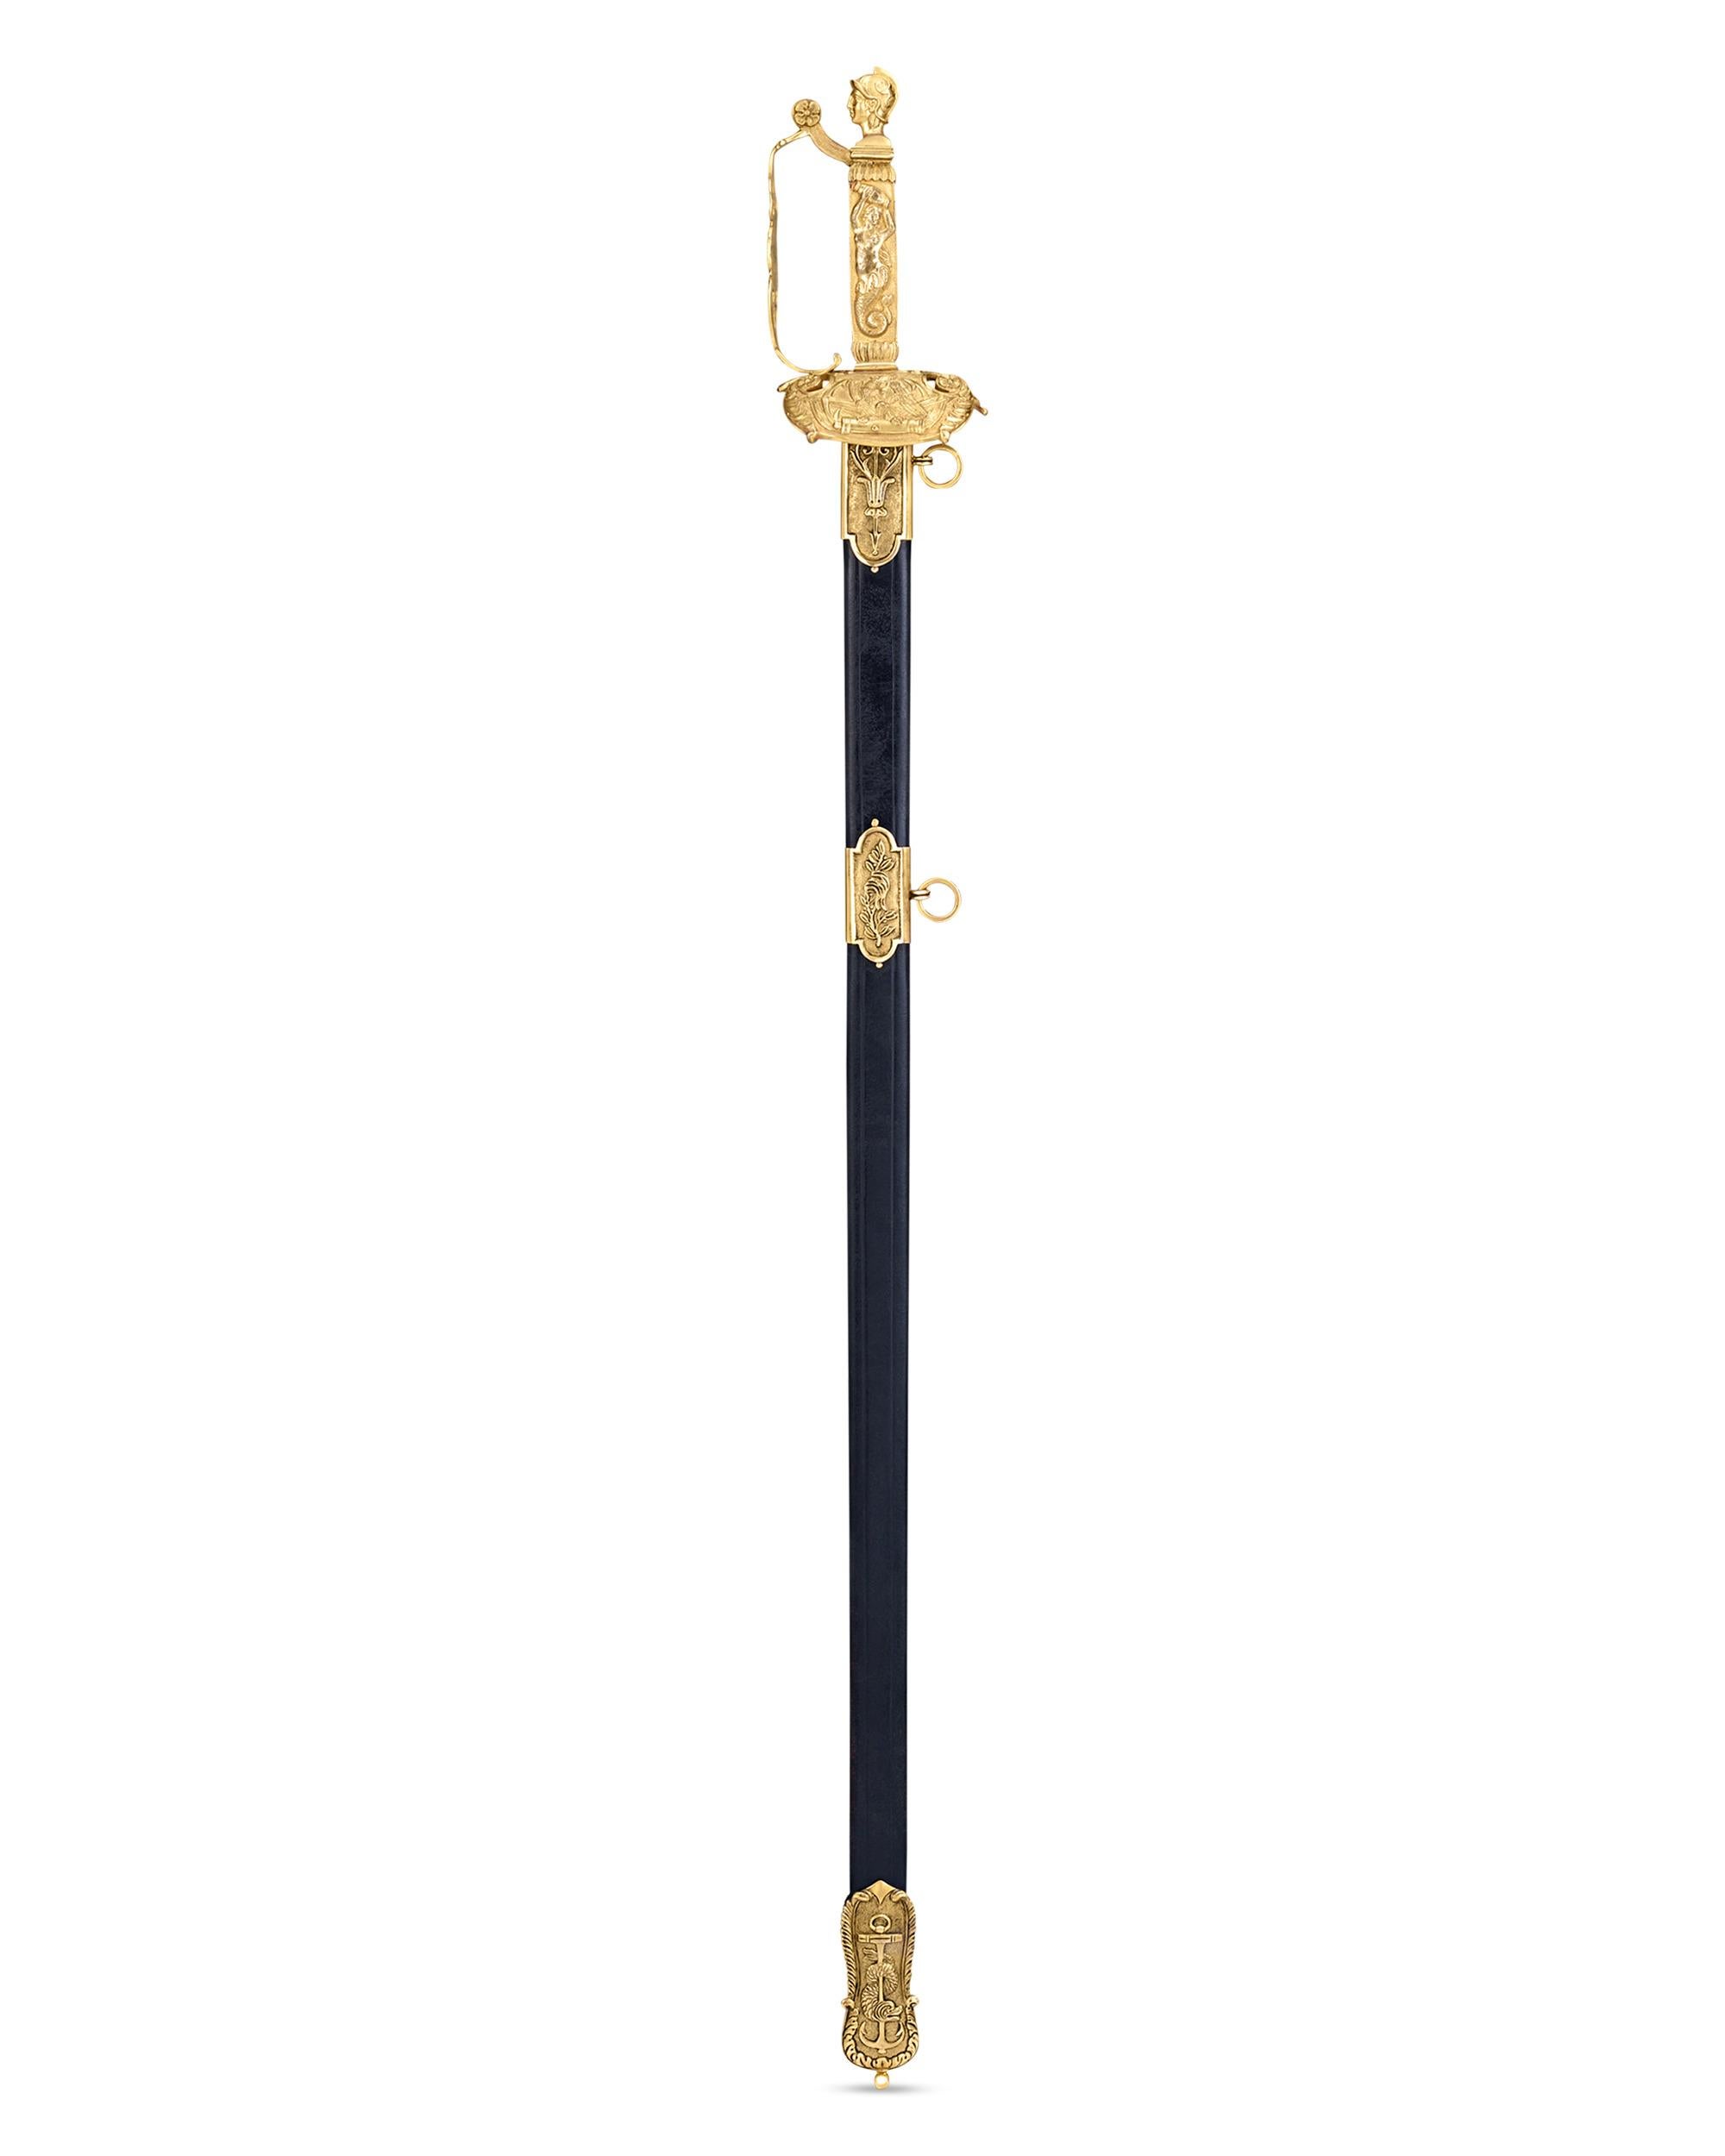 Gilt Congressional Sword of Captain Hazard